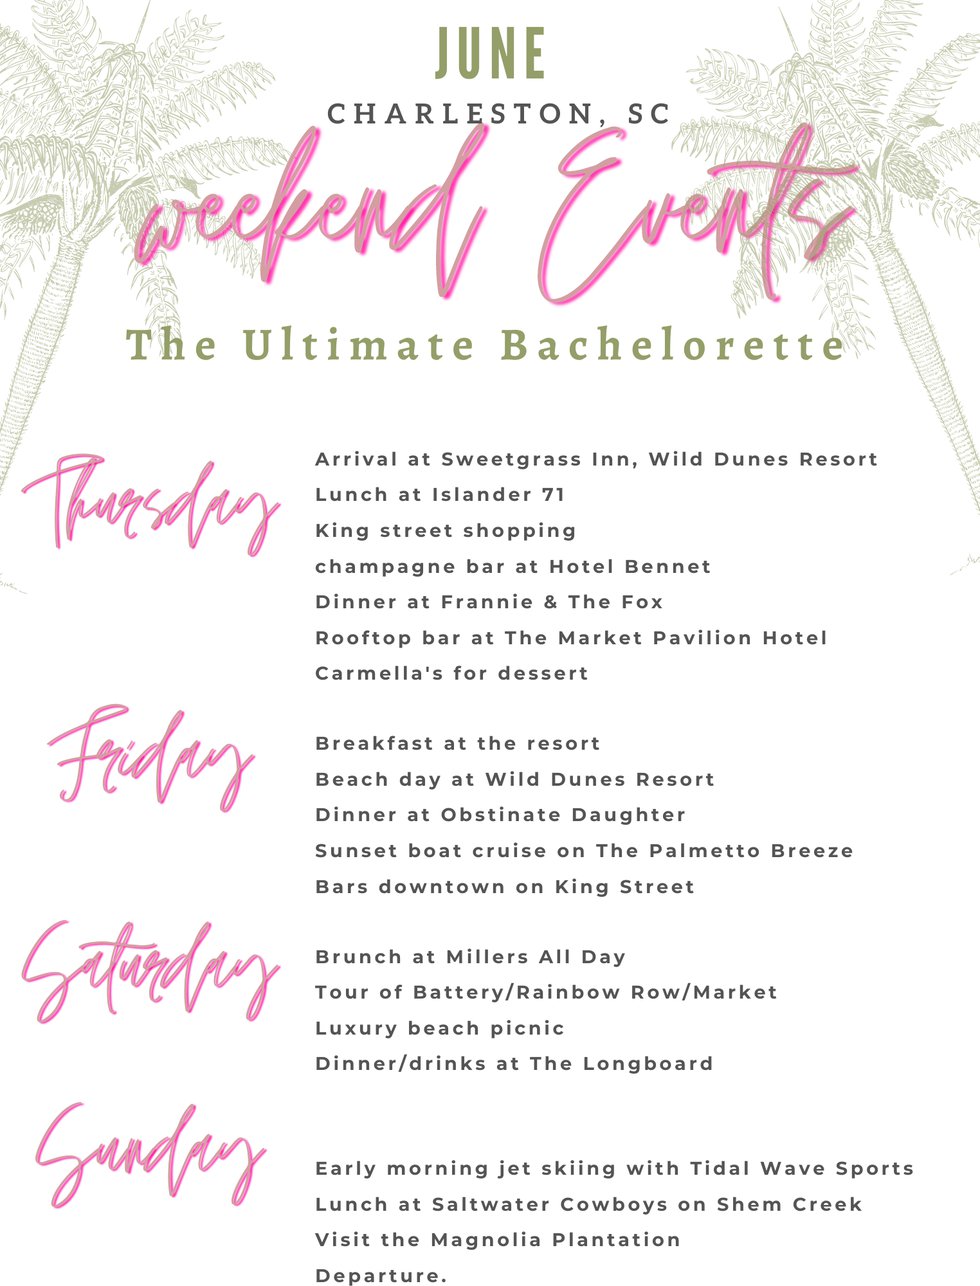 weekend - ultimate bachelorette guide: June